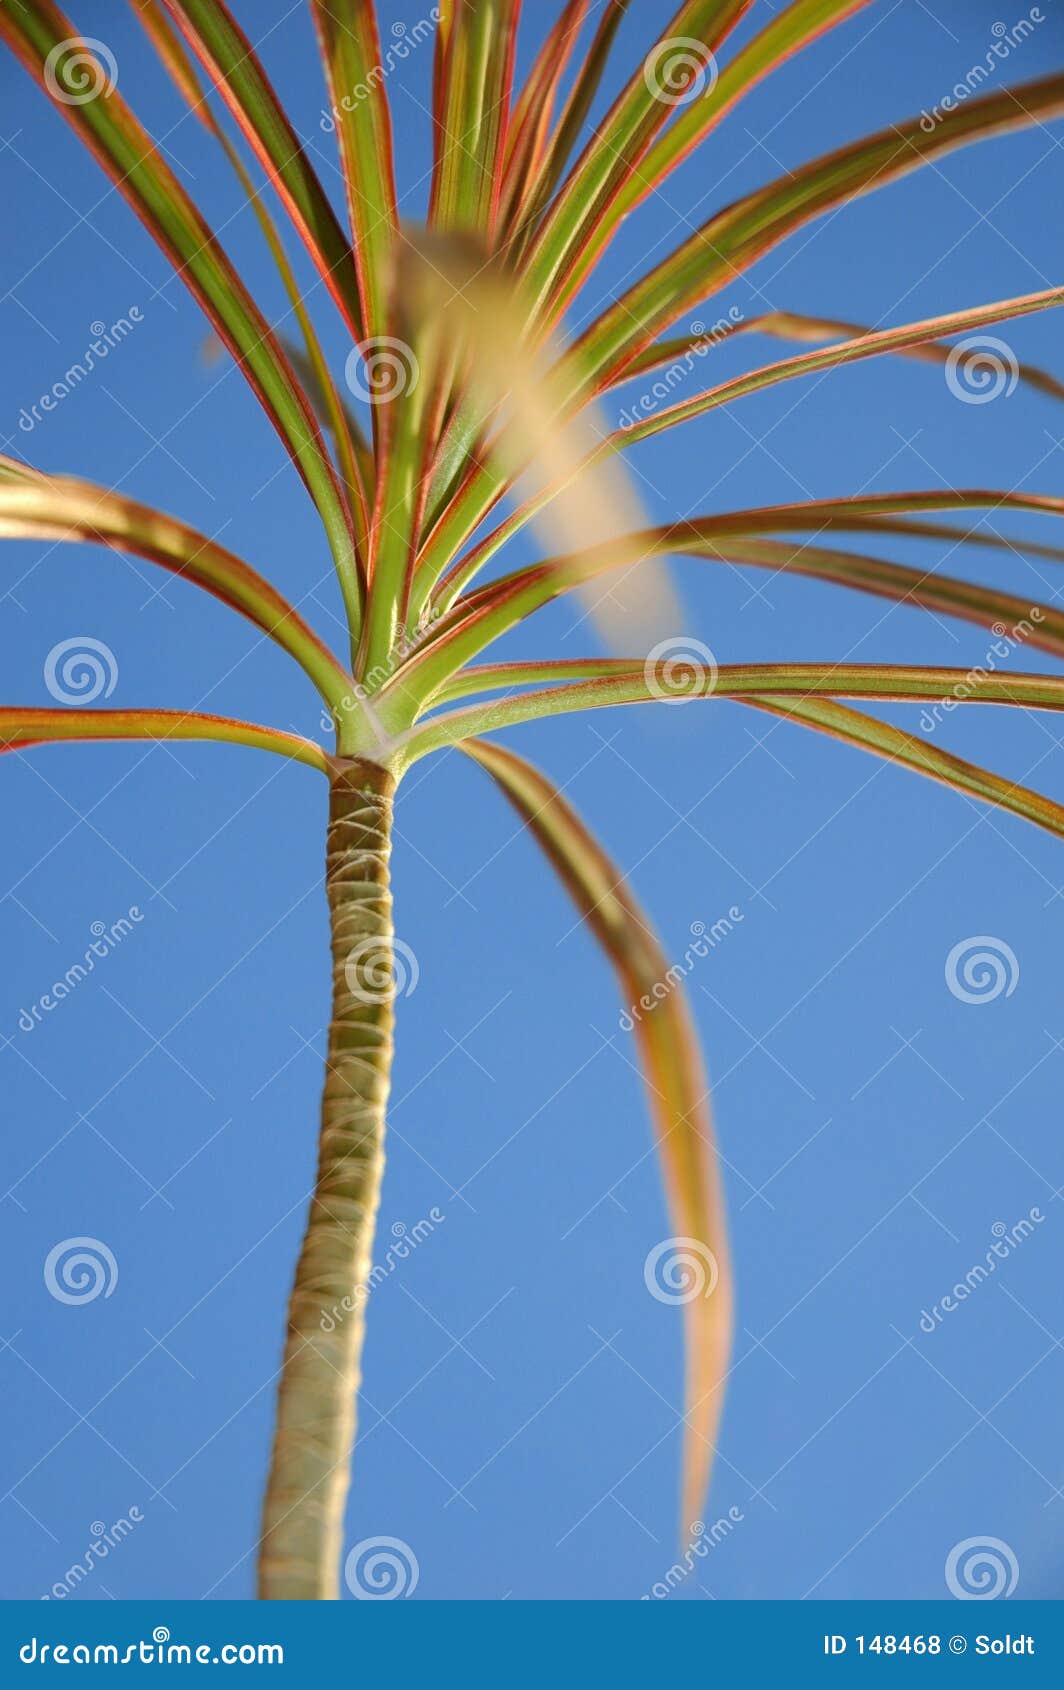 colourful palmtree